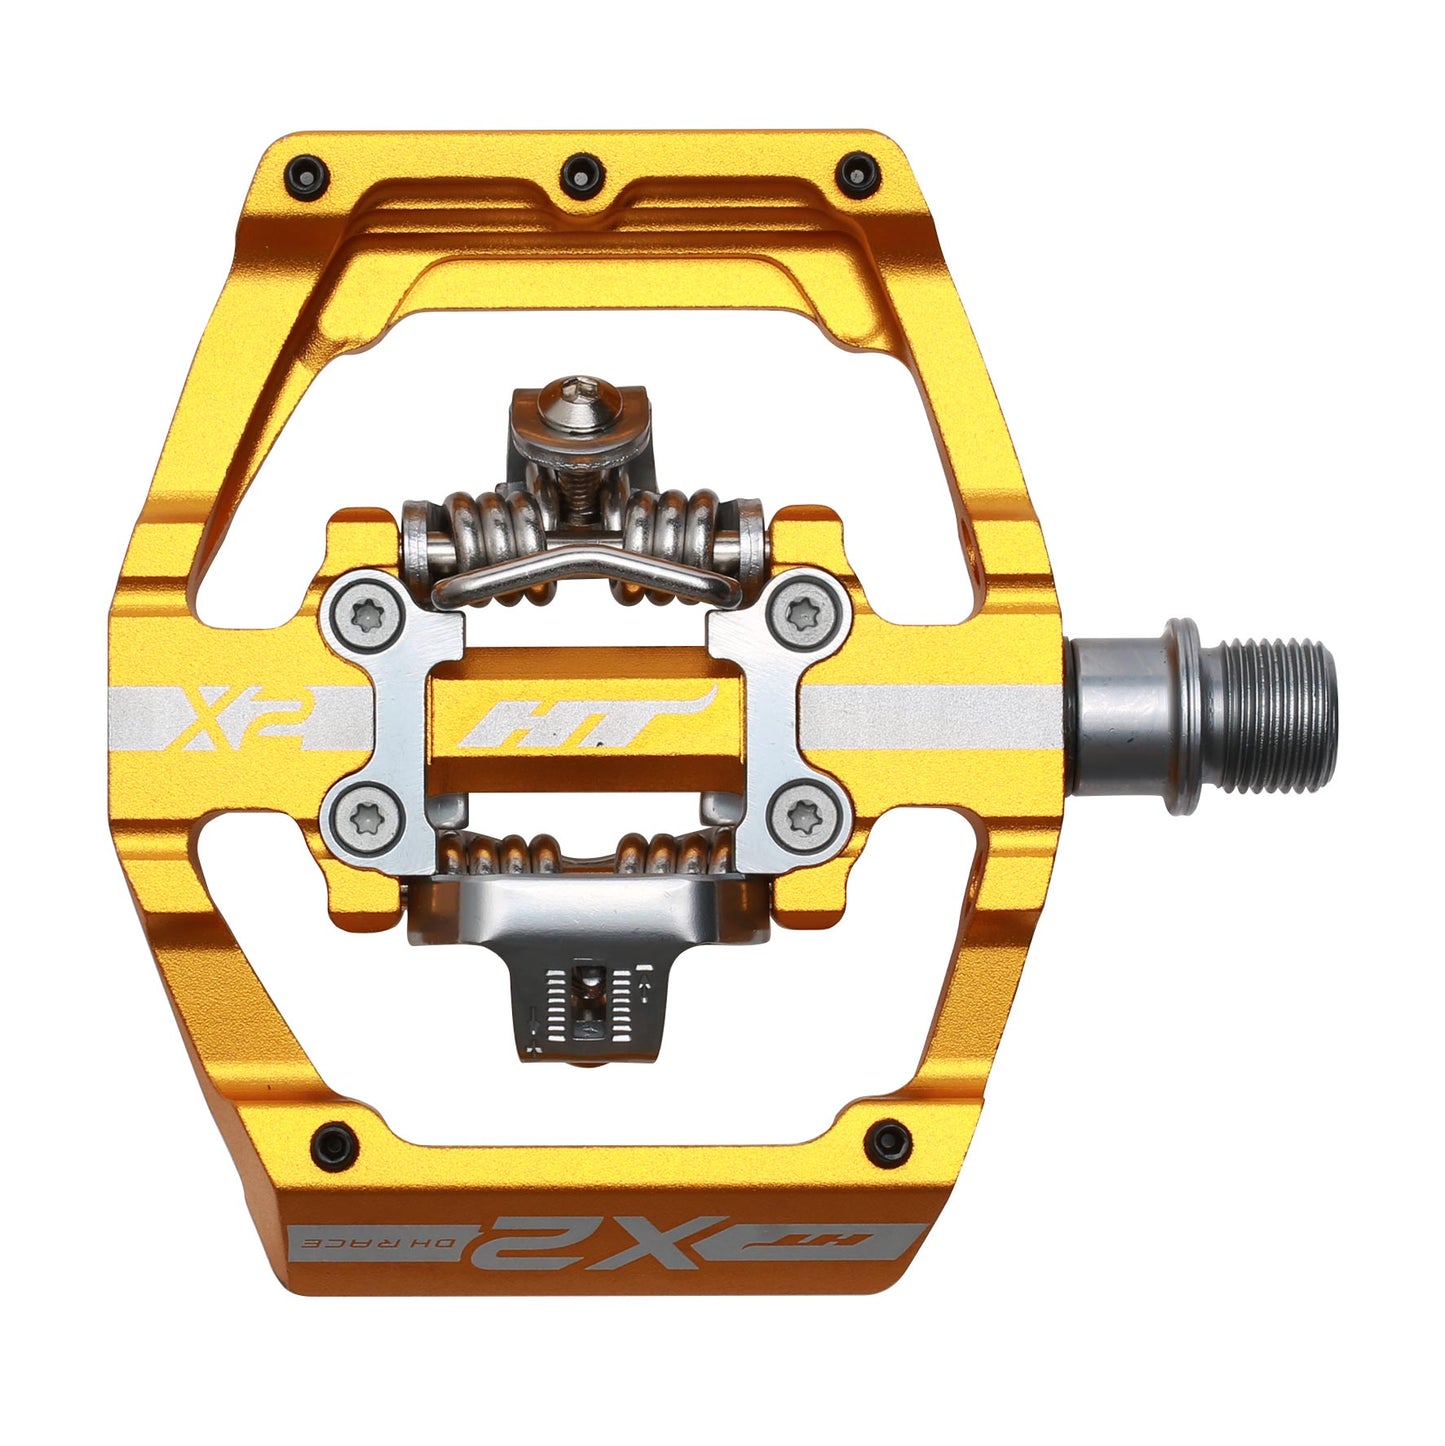 Ht X2 Pedals Alloy / CNC CRMO - Gold